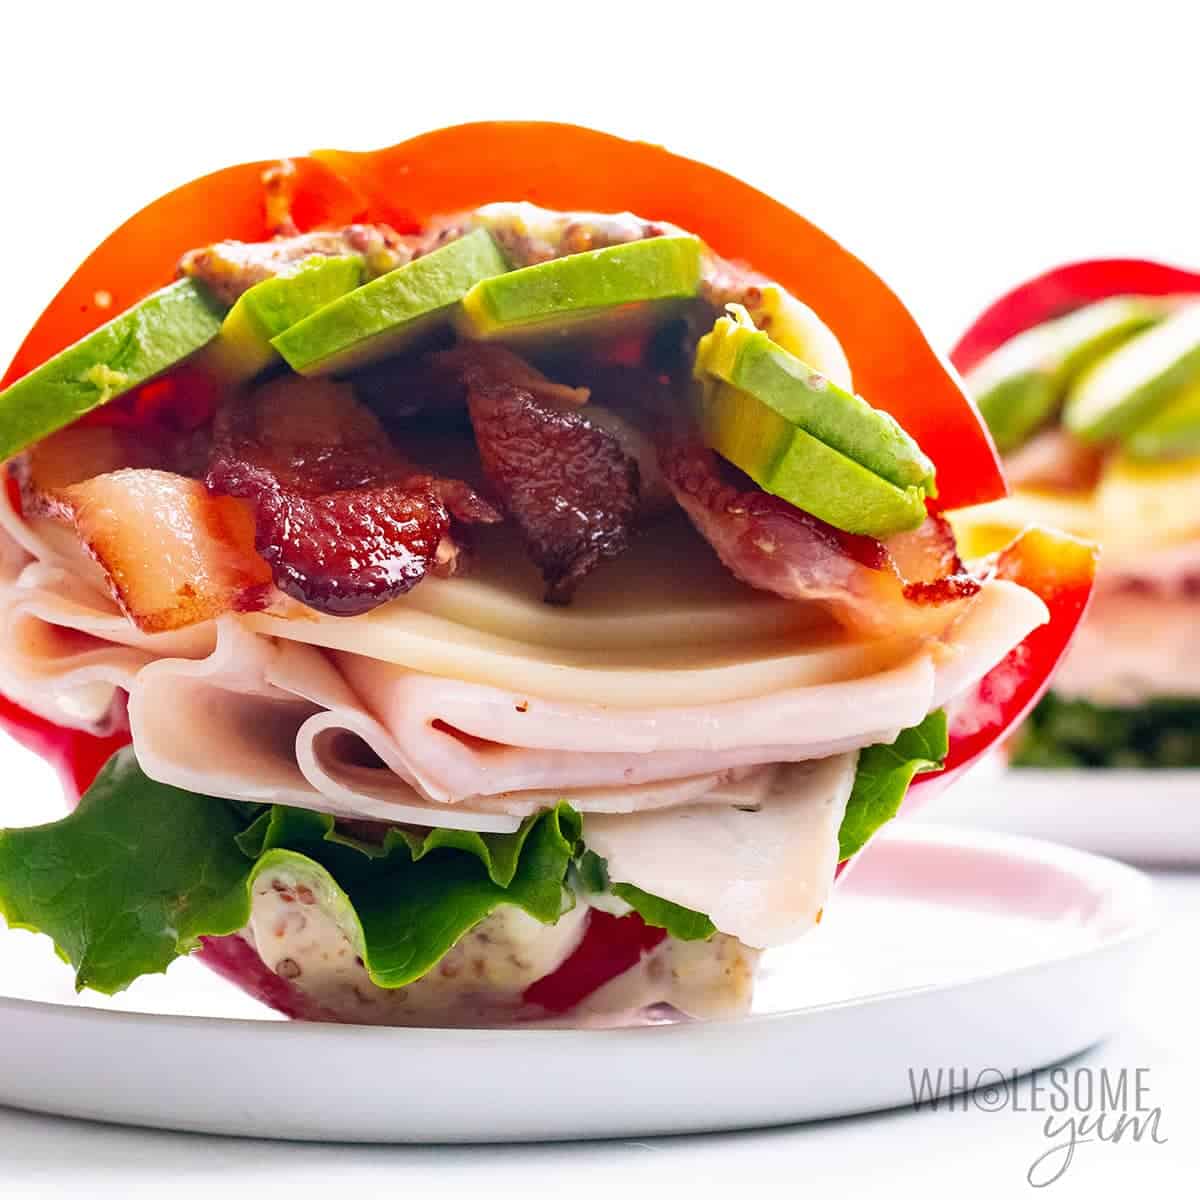 Bell pepper sandwich recipe on a plate